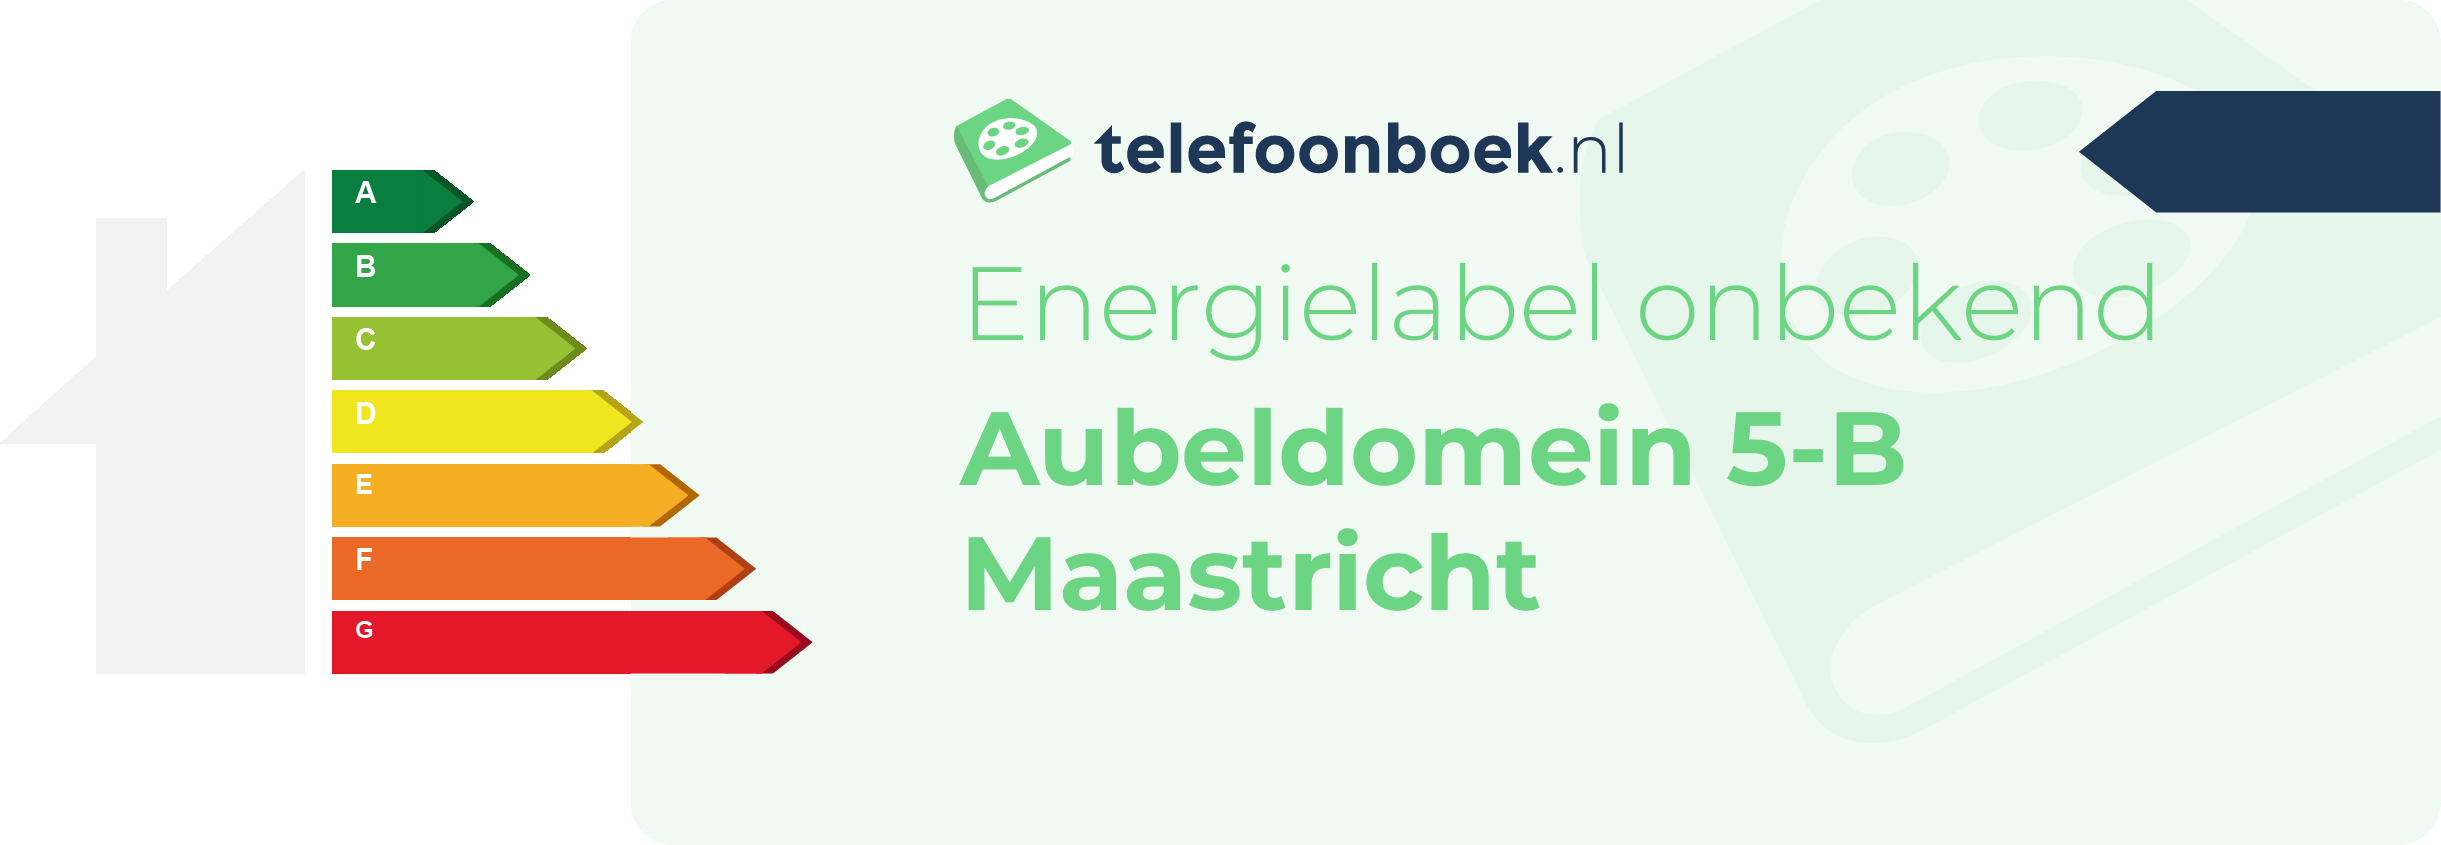 Energielabel Aubeldomein 5-B Maastricht